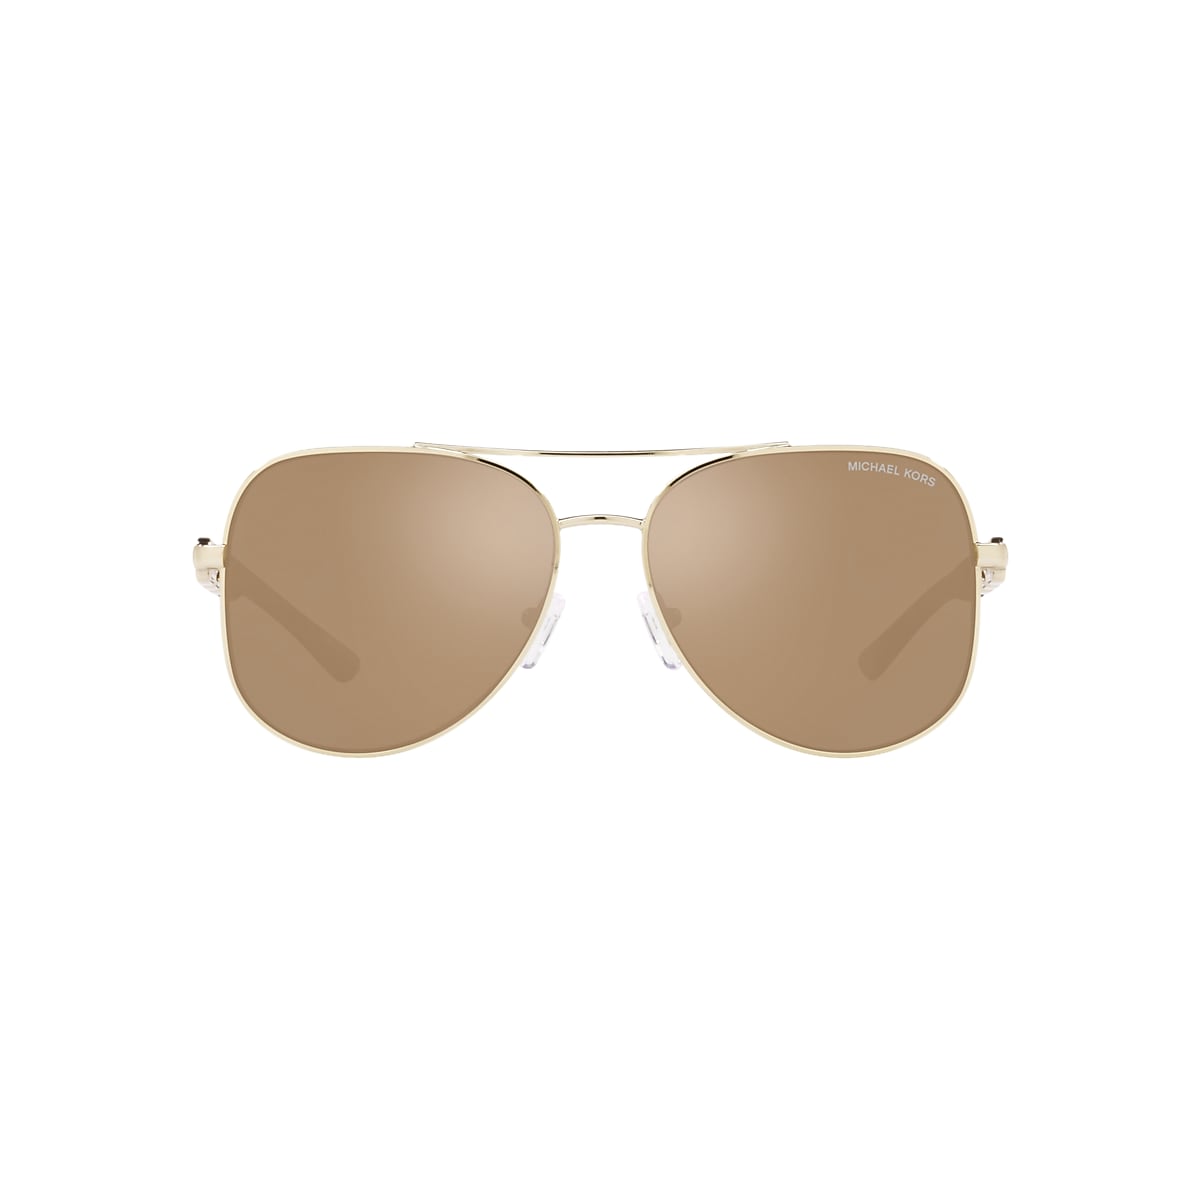 Michael Kors MK1121 Chianti 58 Gold Mirror & Light Gold Sunglasses 